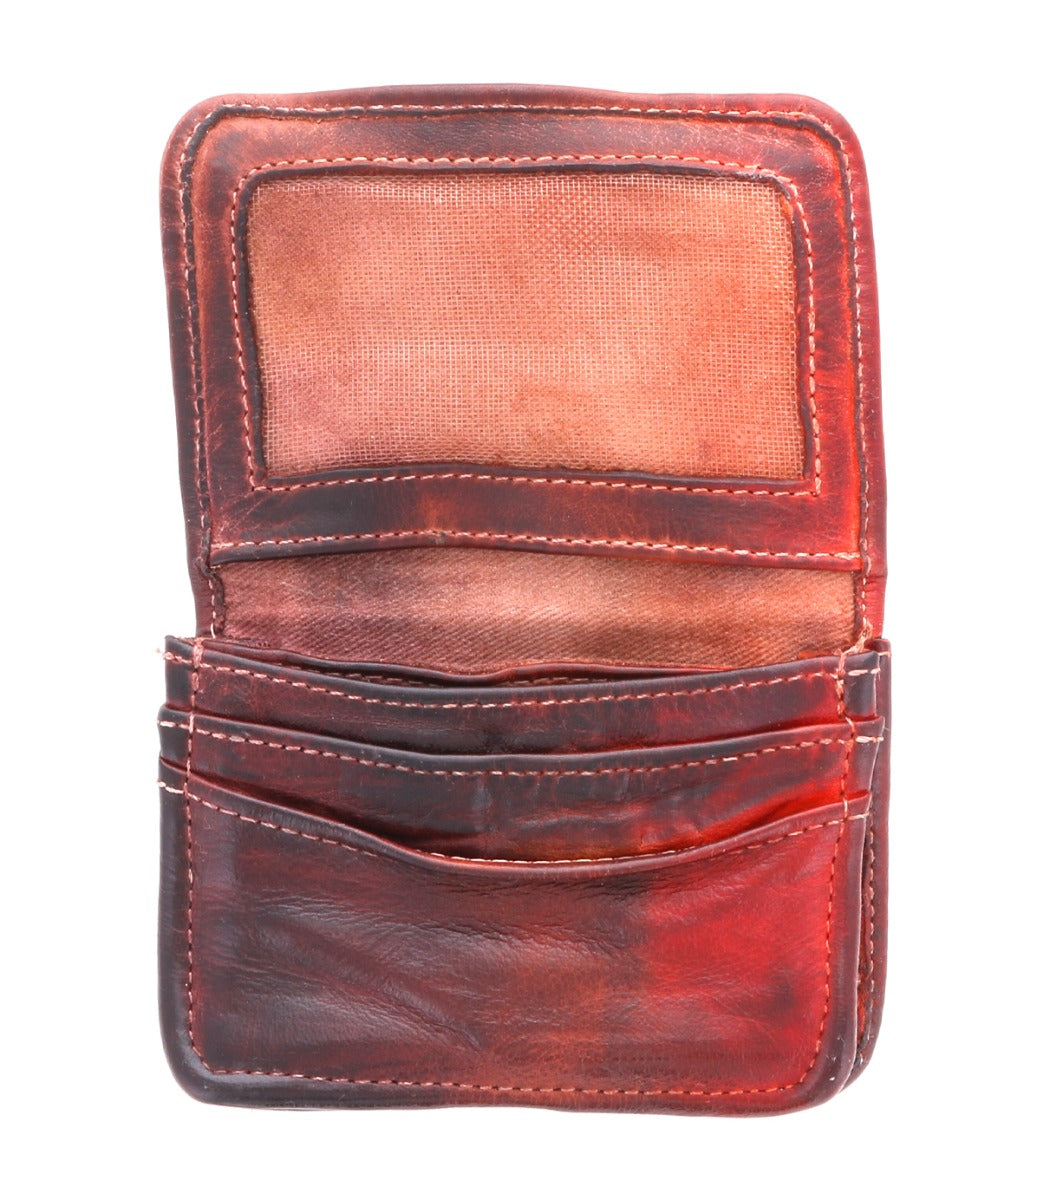 Leather Wallet For Men at Rs 325 | Topsia | Kolkata | ID: 26019000530